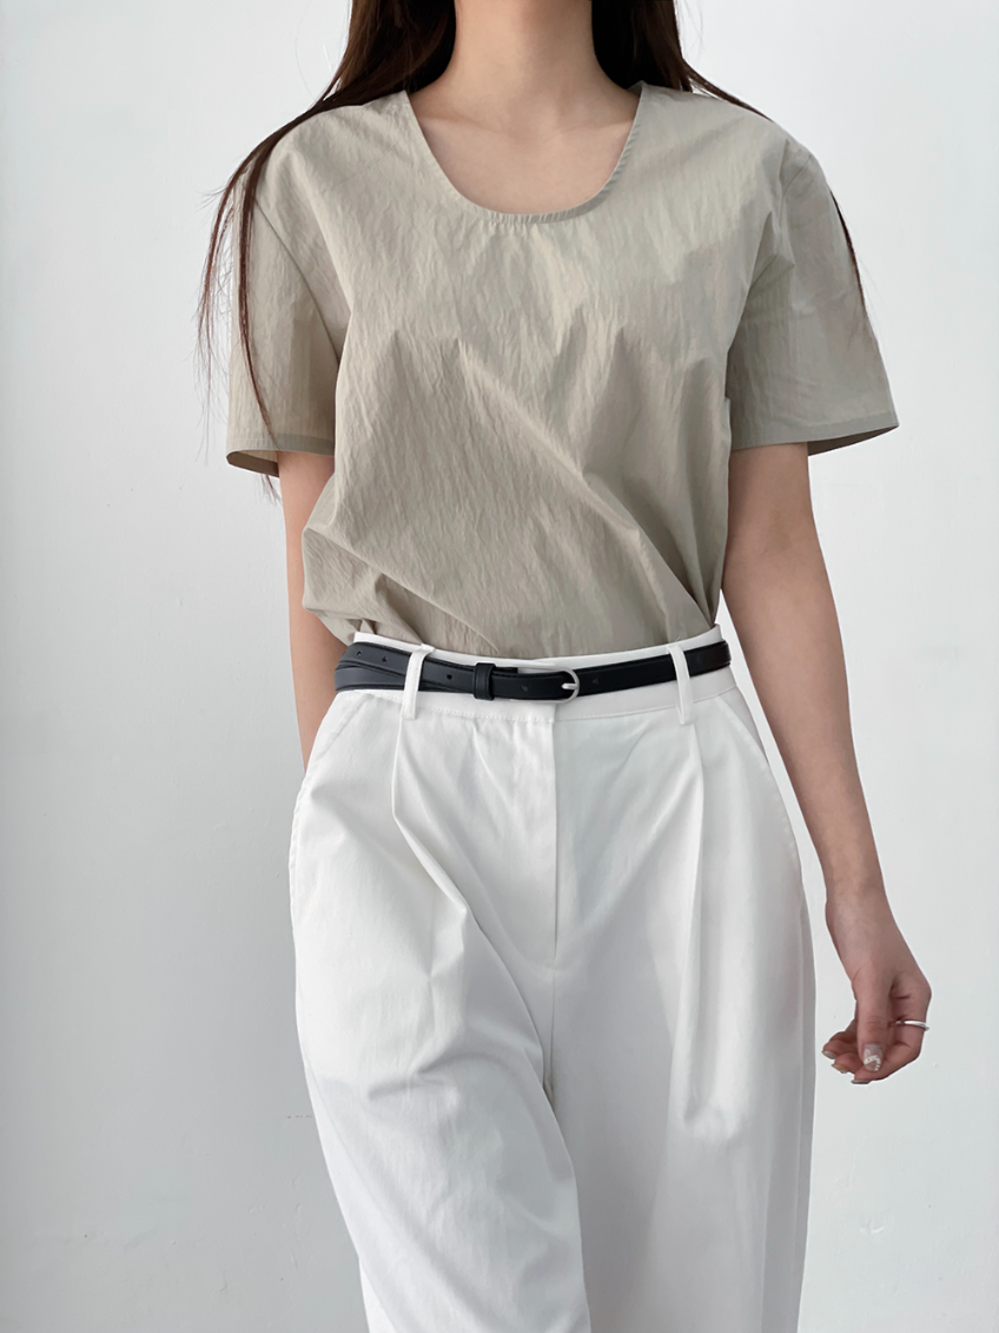 nylon u-neck blouse top (4color)